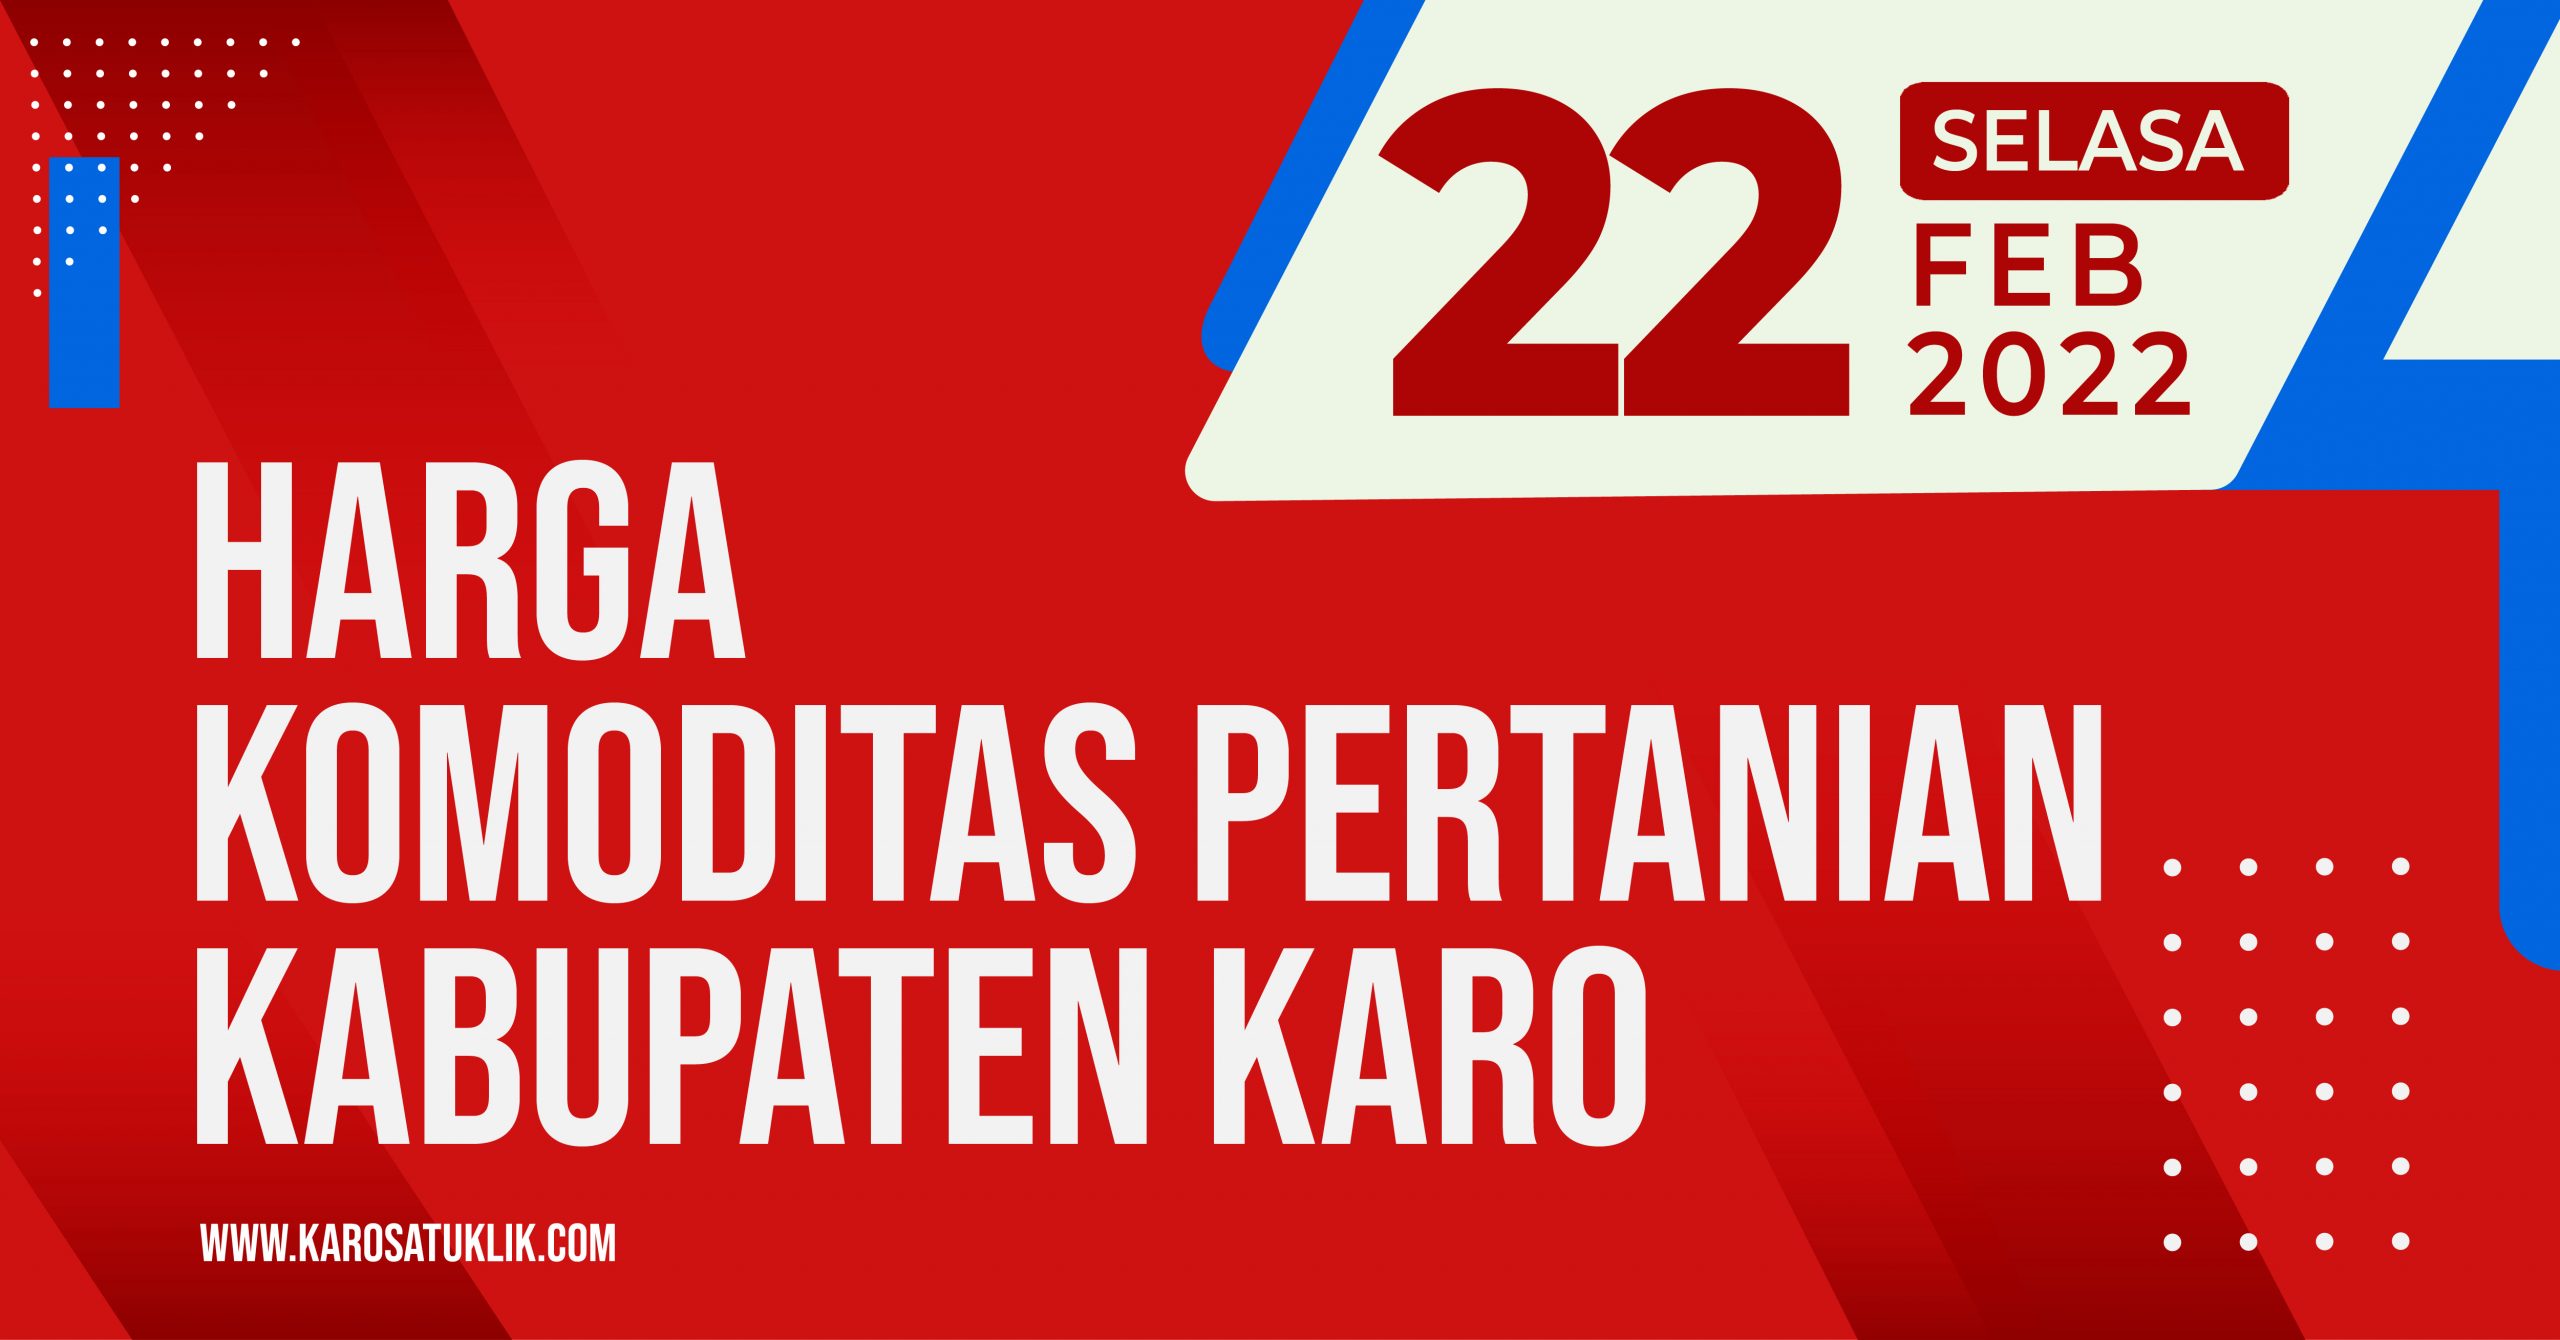 Daftar Harga Komoditas Pertanian Kabupaten Karo, 22 Februari 2022